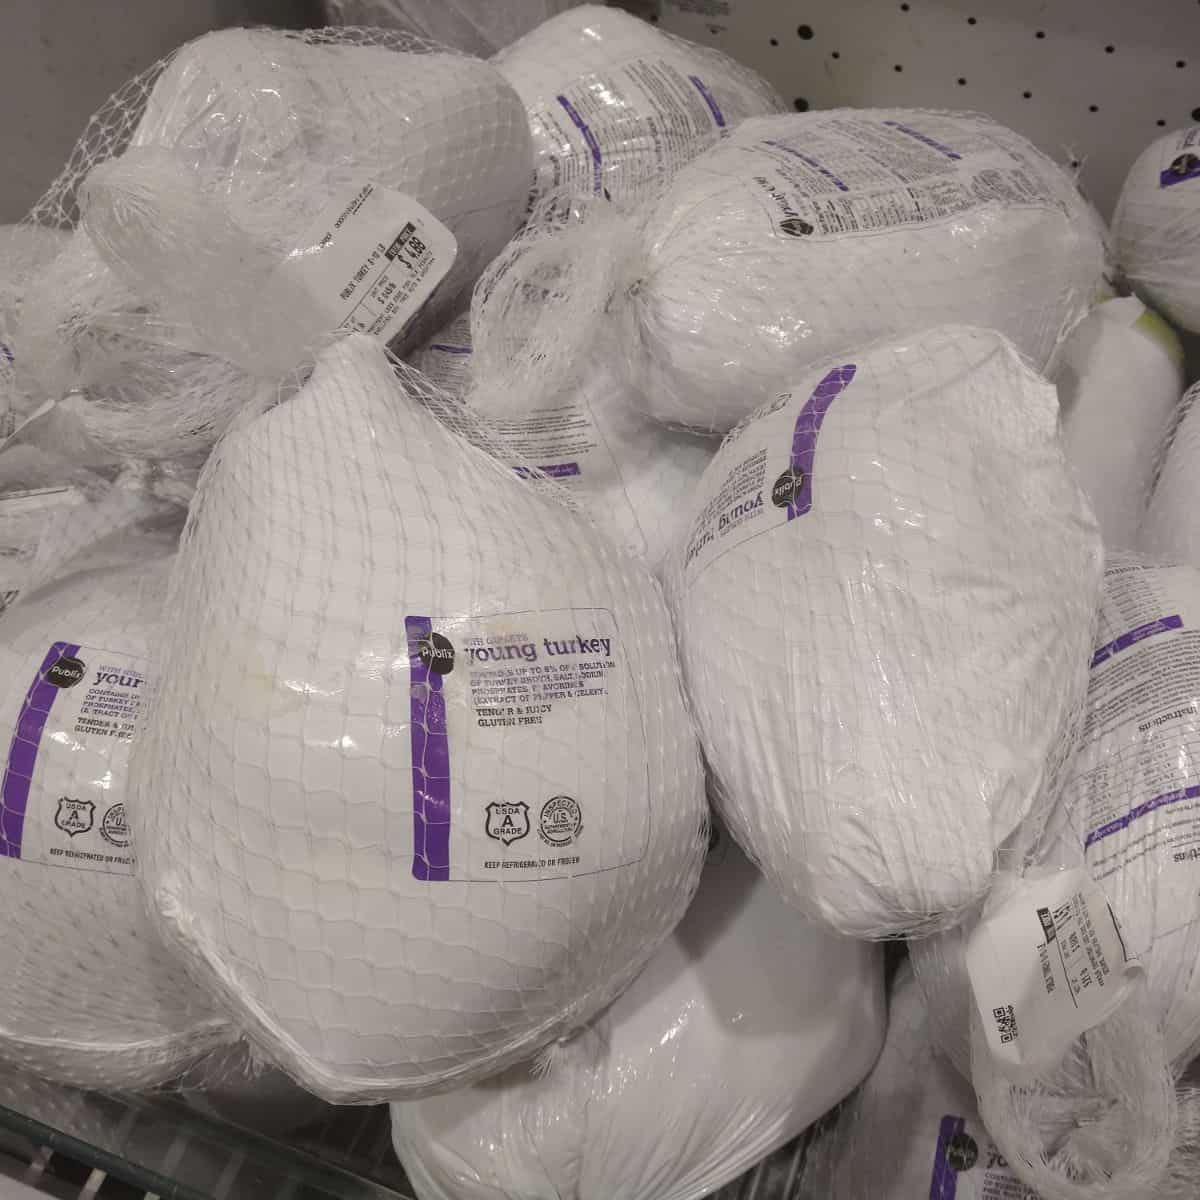 A display of Publix brand frozen turkeys in the case.